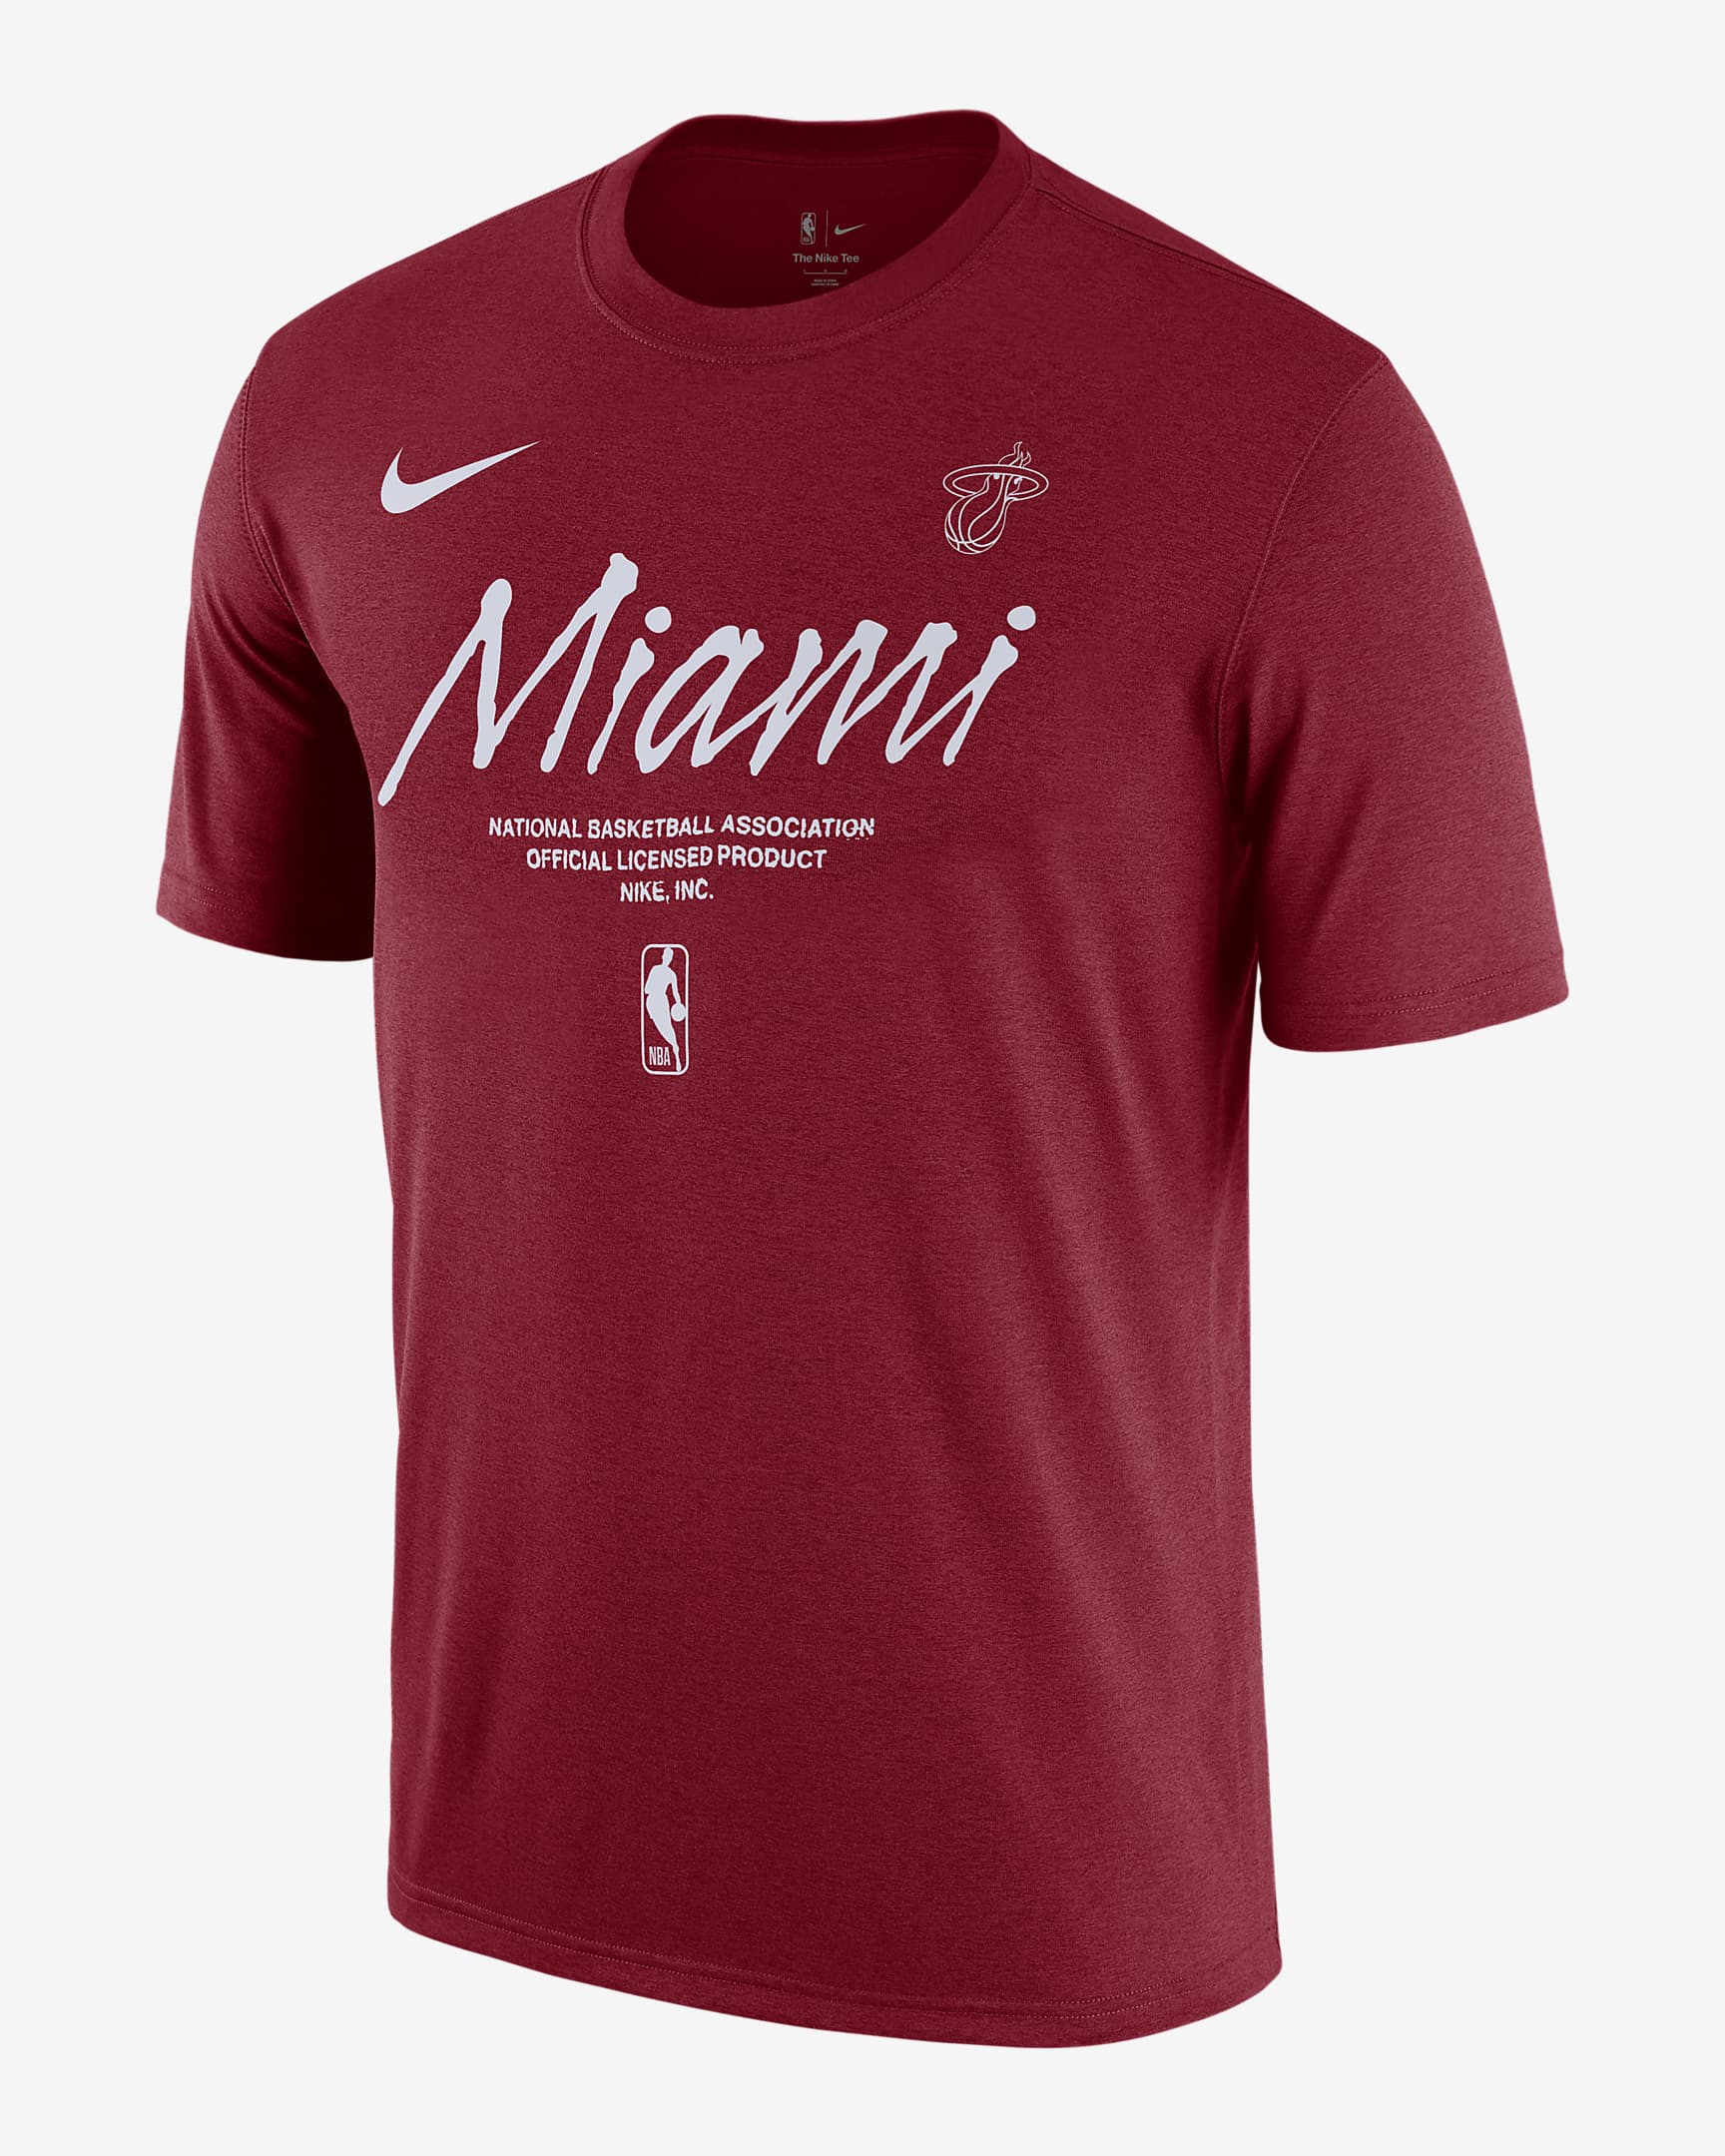 Playera Nike de la NBA para hombre Miami Heat Essential.